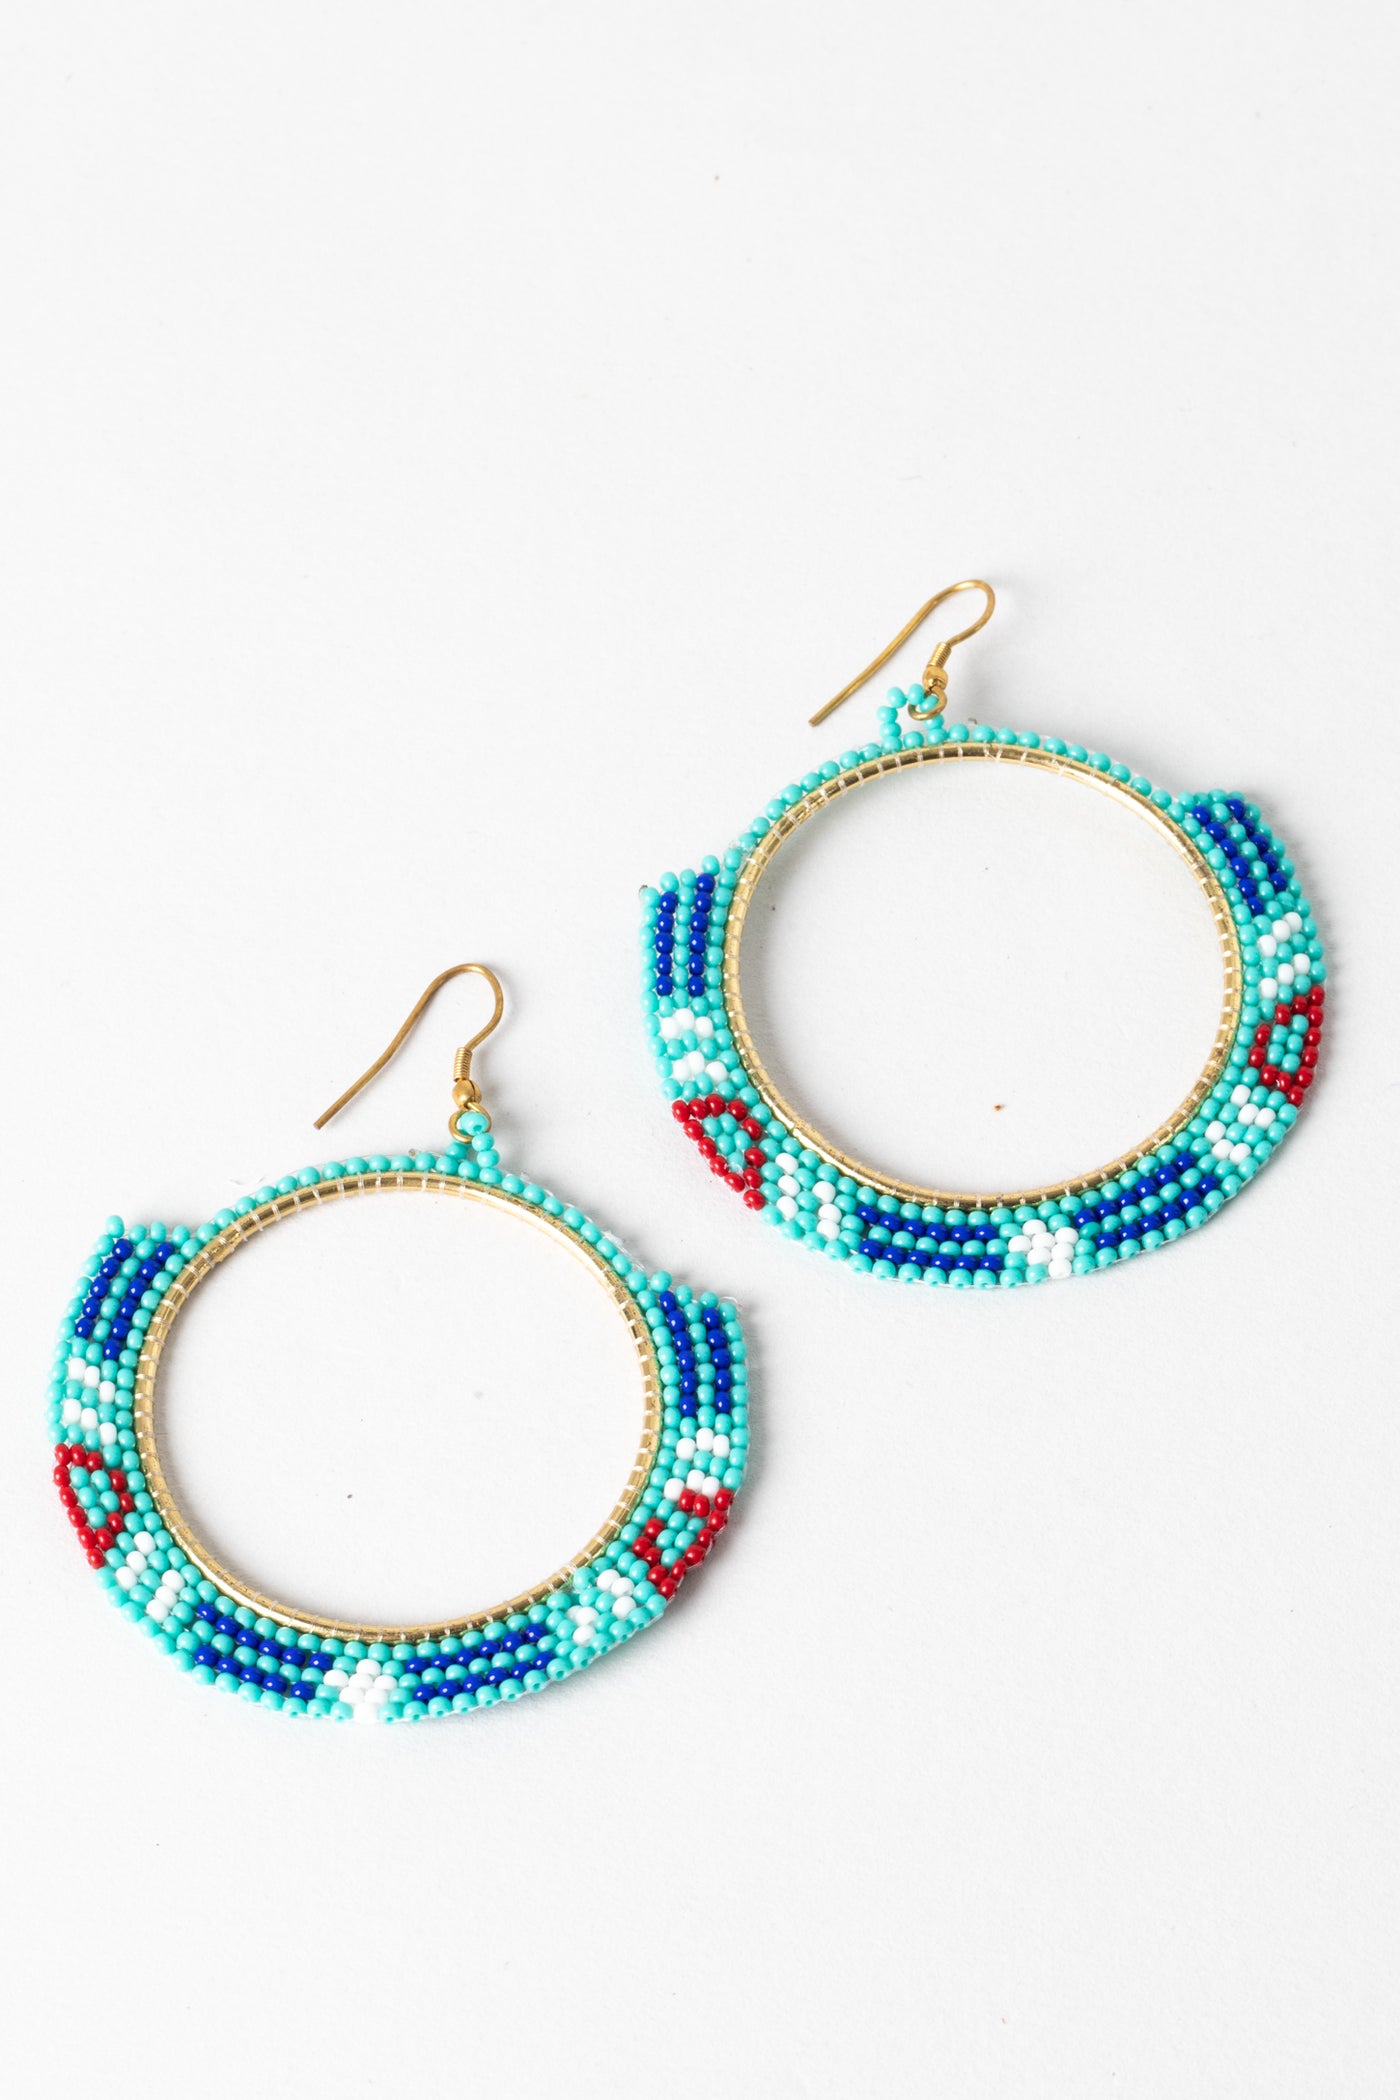 Blue Moon Beads Gold Metal Hoop Earrings for Jewelry Making , 36 Piece